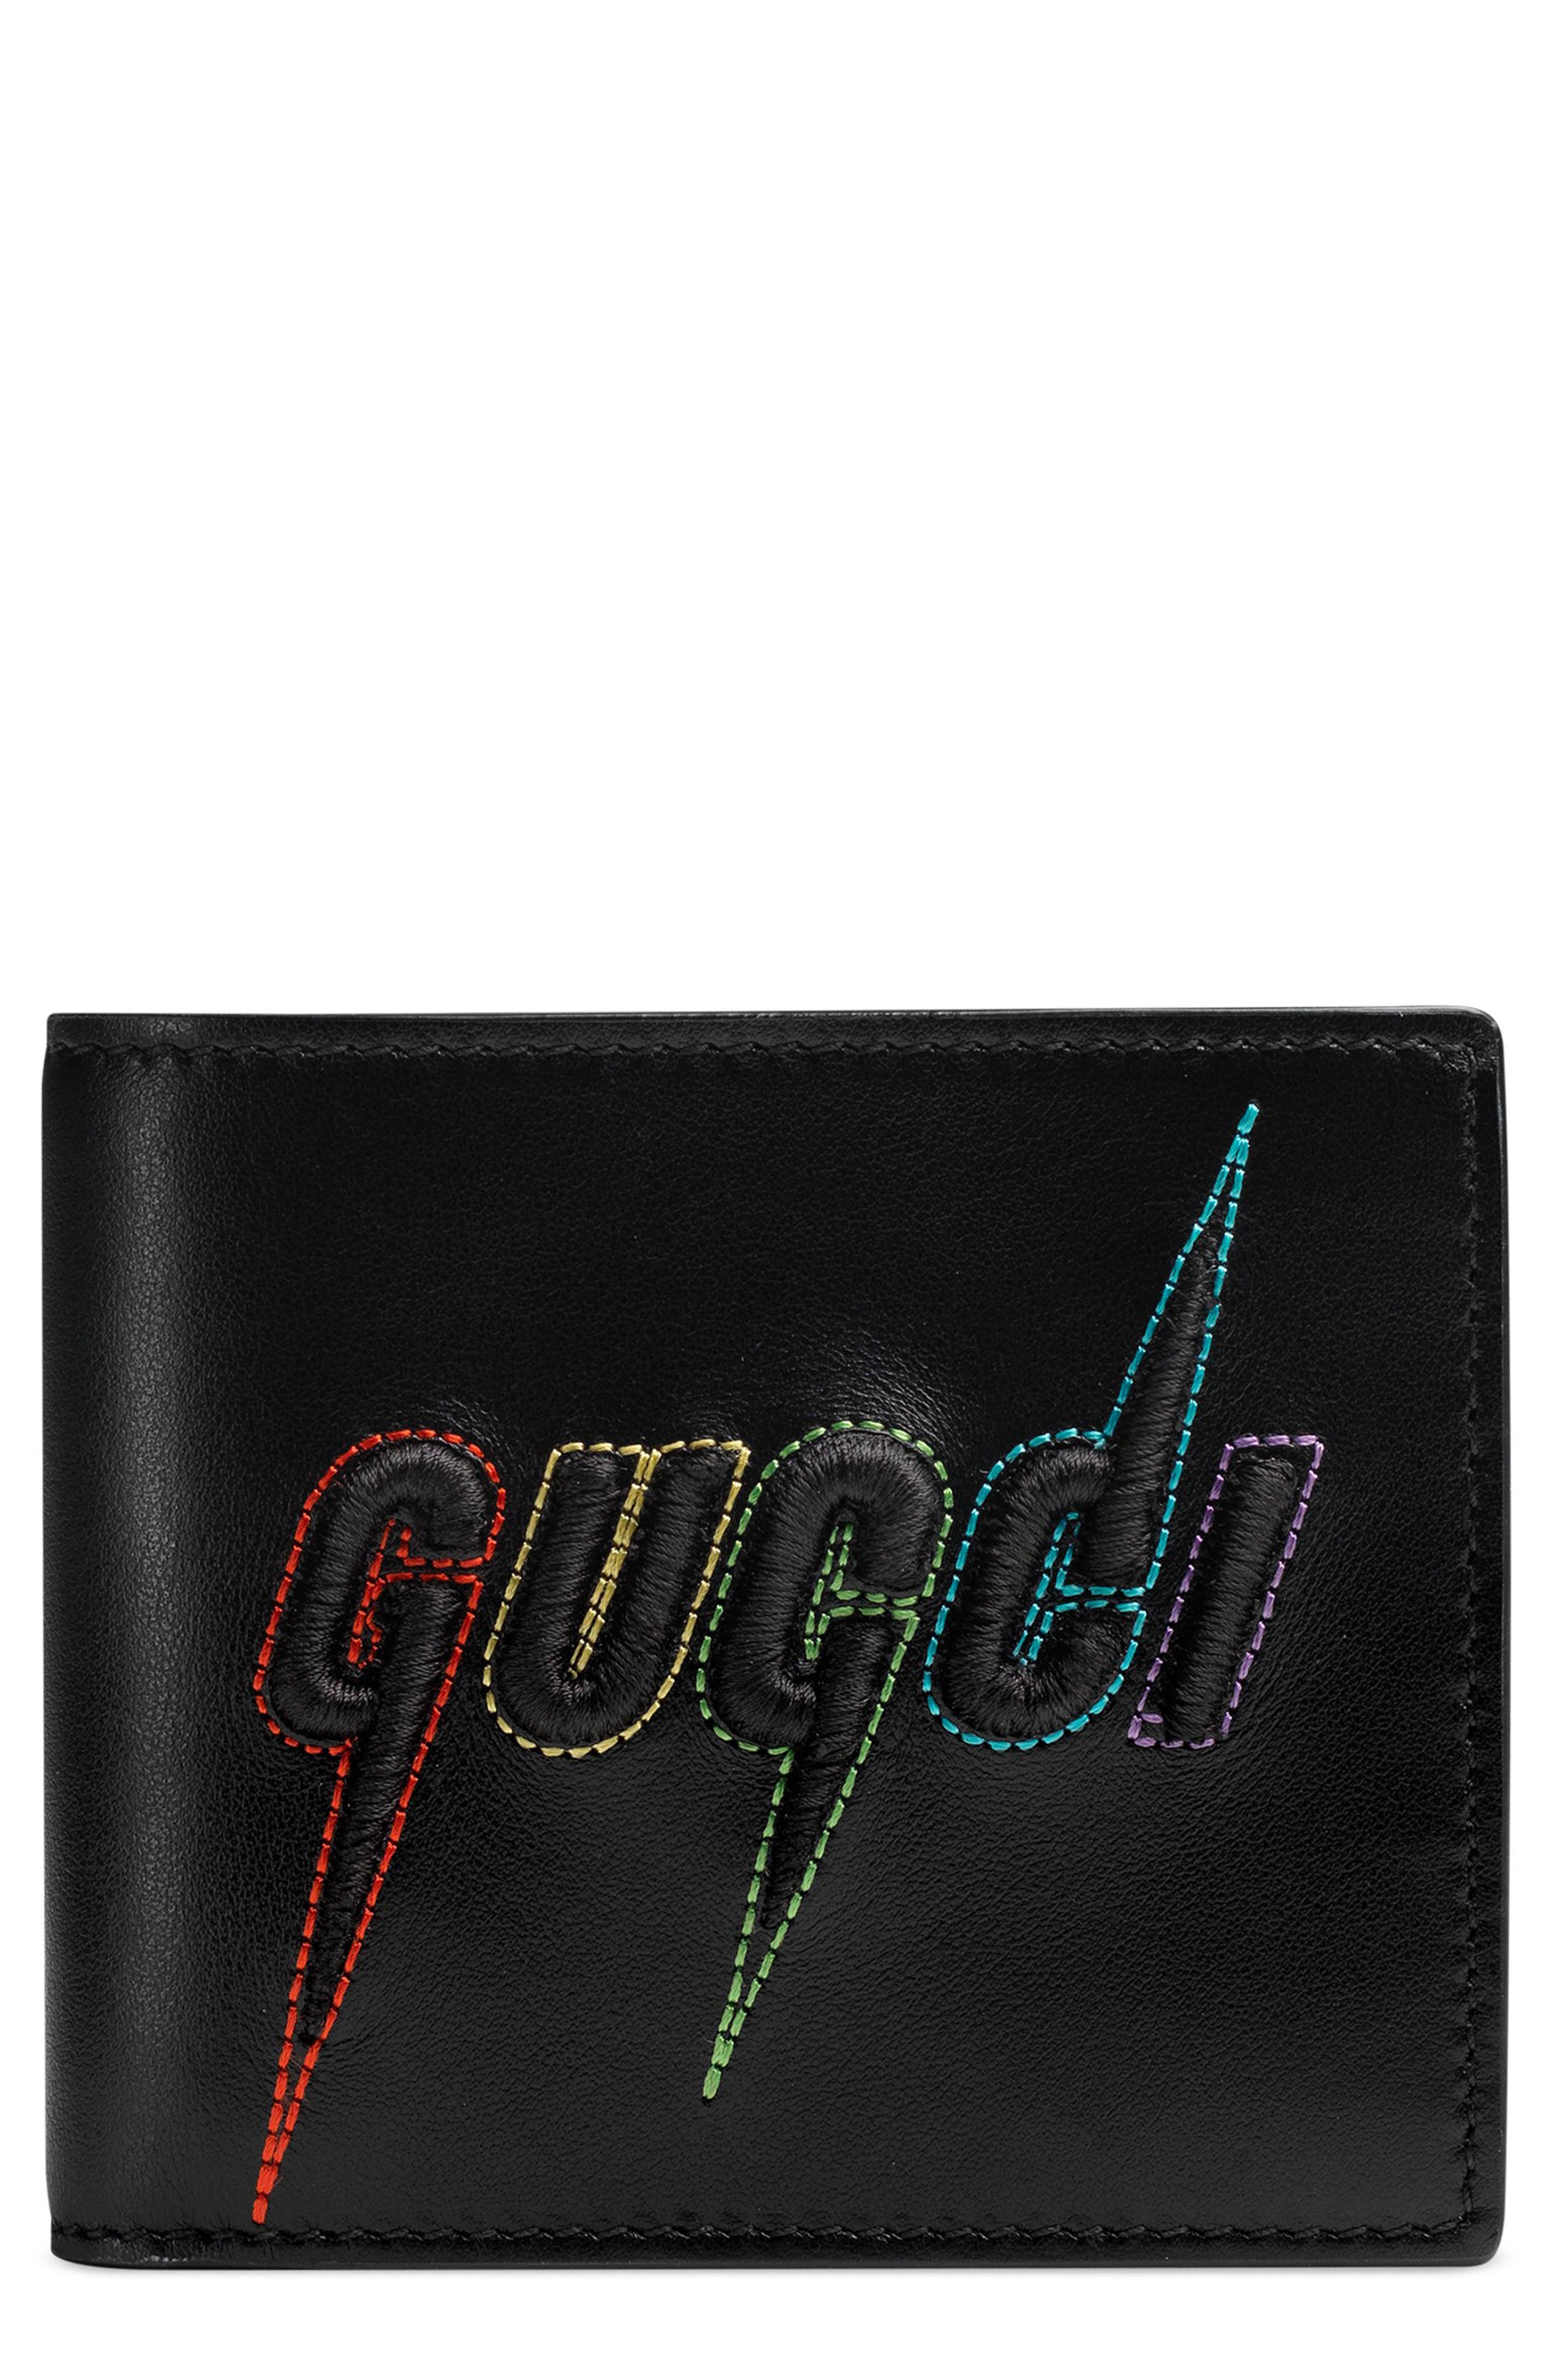 custom gucci wallet